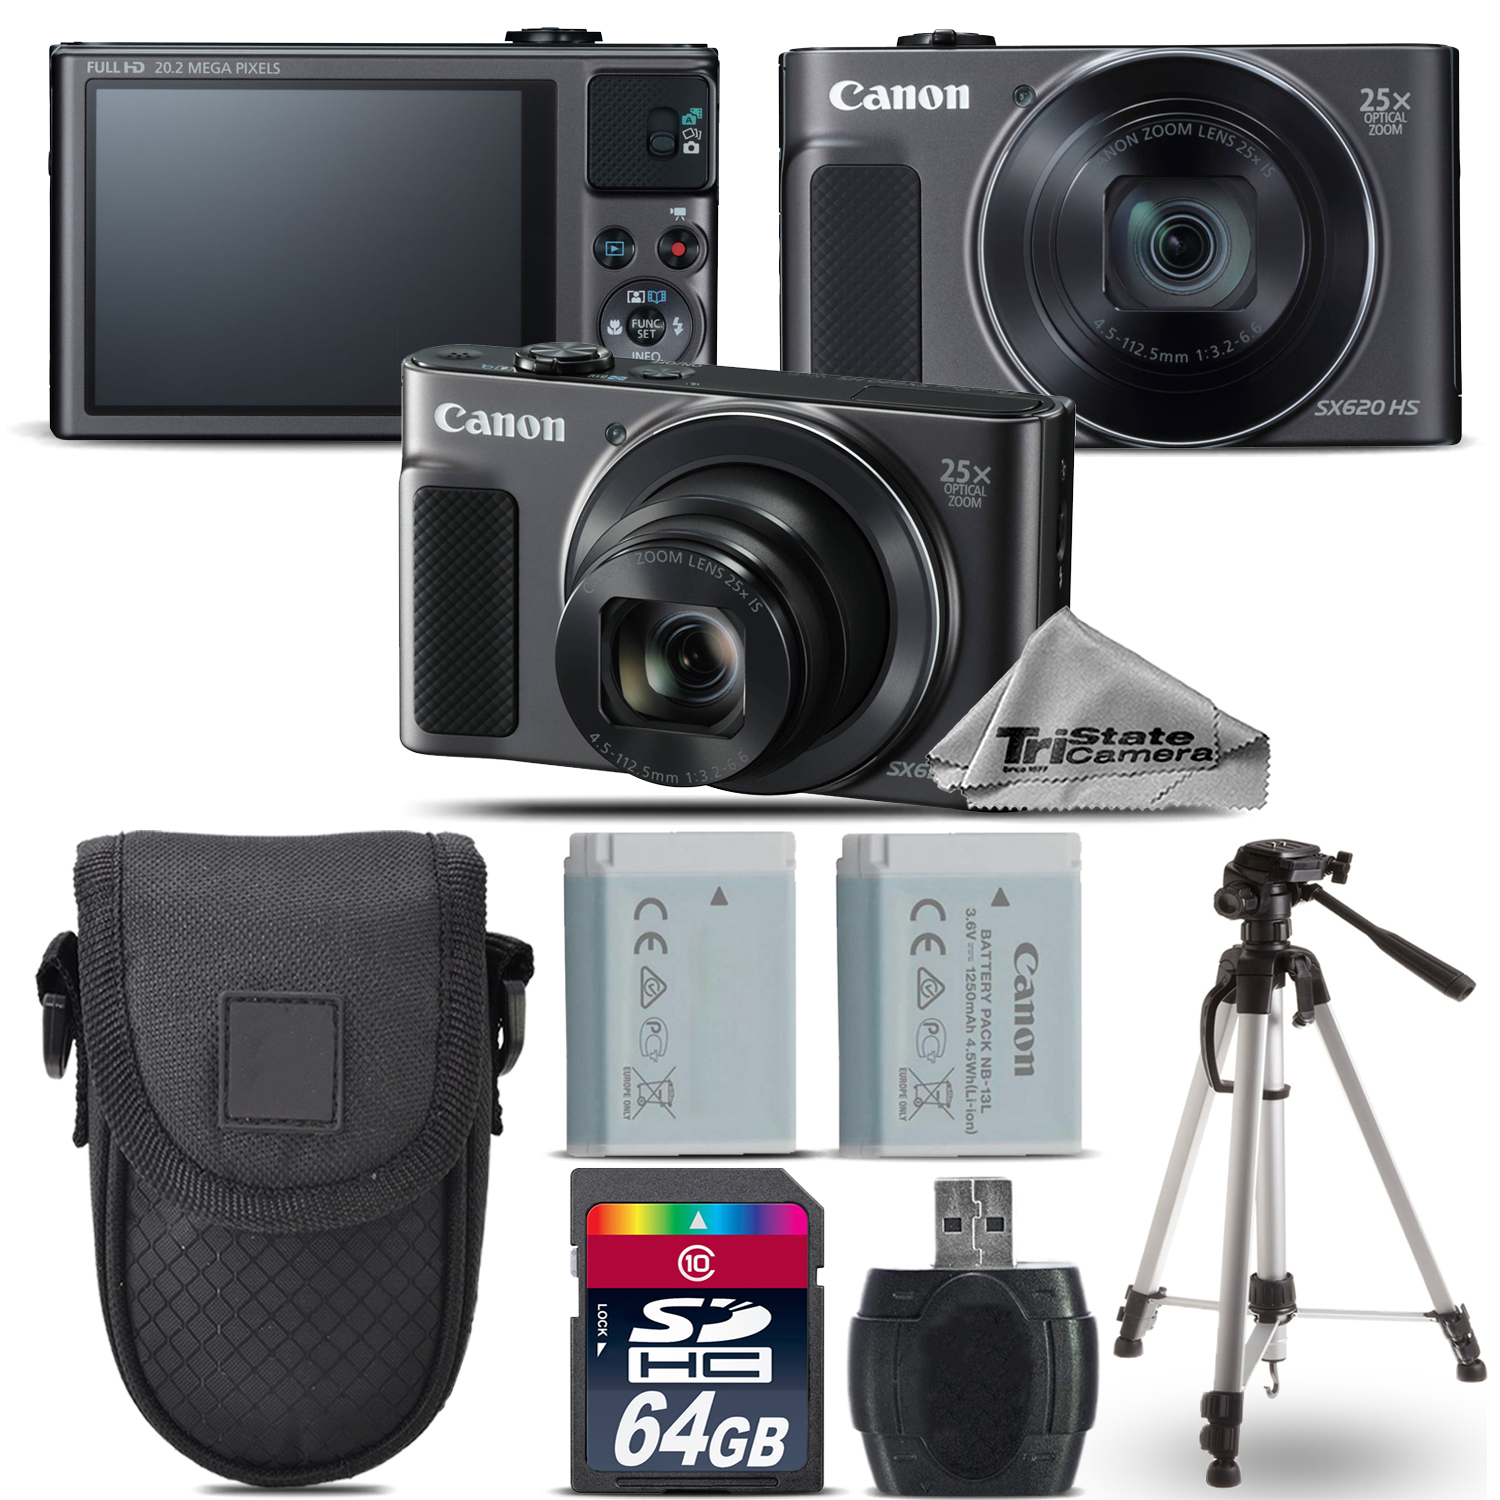 PowerShot SX620 HS Camera (Black) + Extra Battery +Tripod + Case -64GB Kit *FREE SHIPPING*